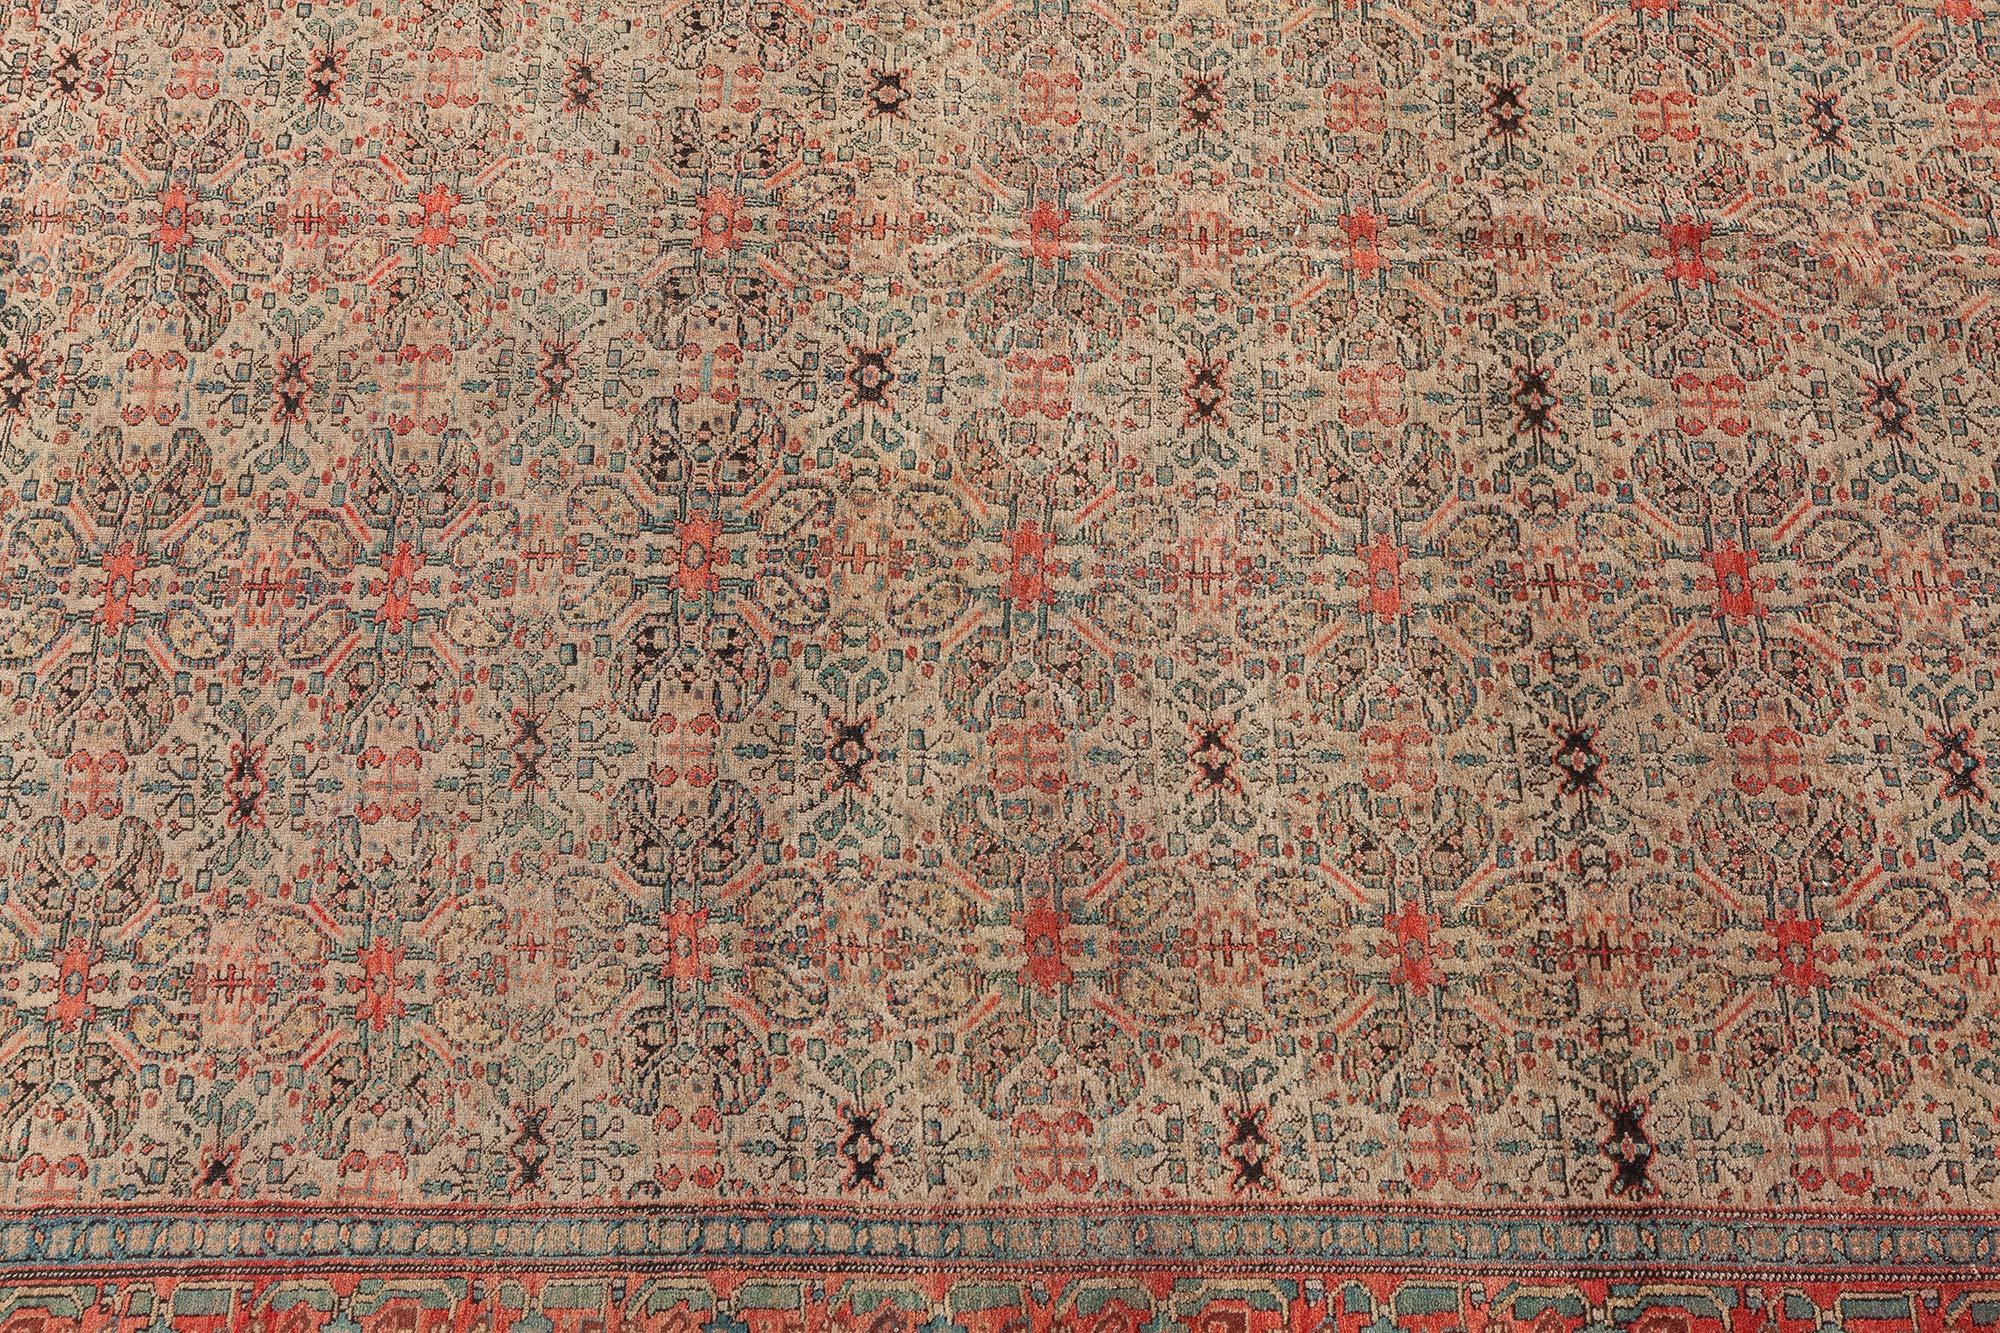 Authentic 19th Century Persian Senneh Botanic Blue Red Beige Handmade Wool Rug
Size: 5'1